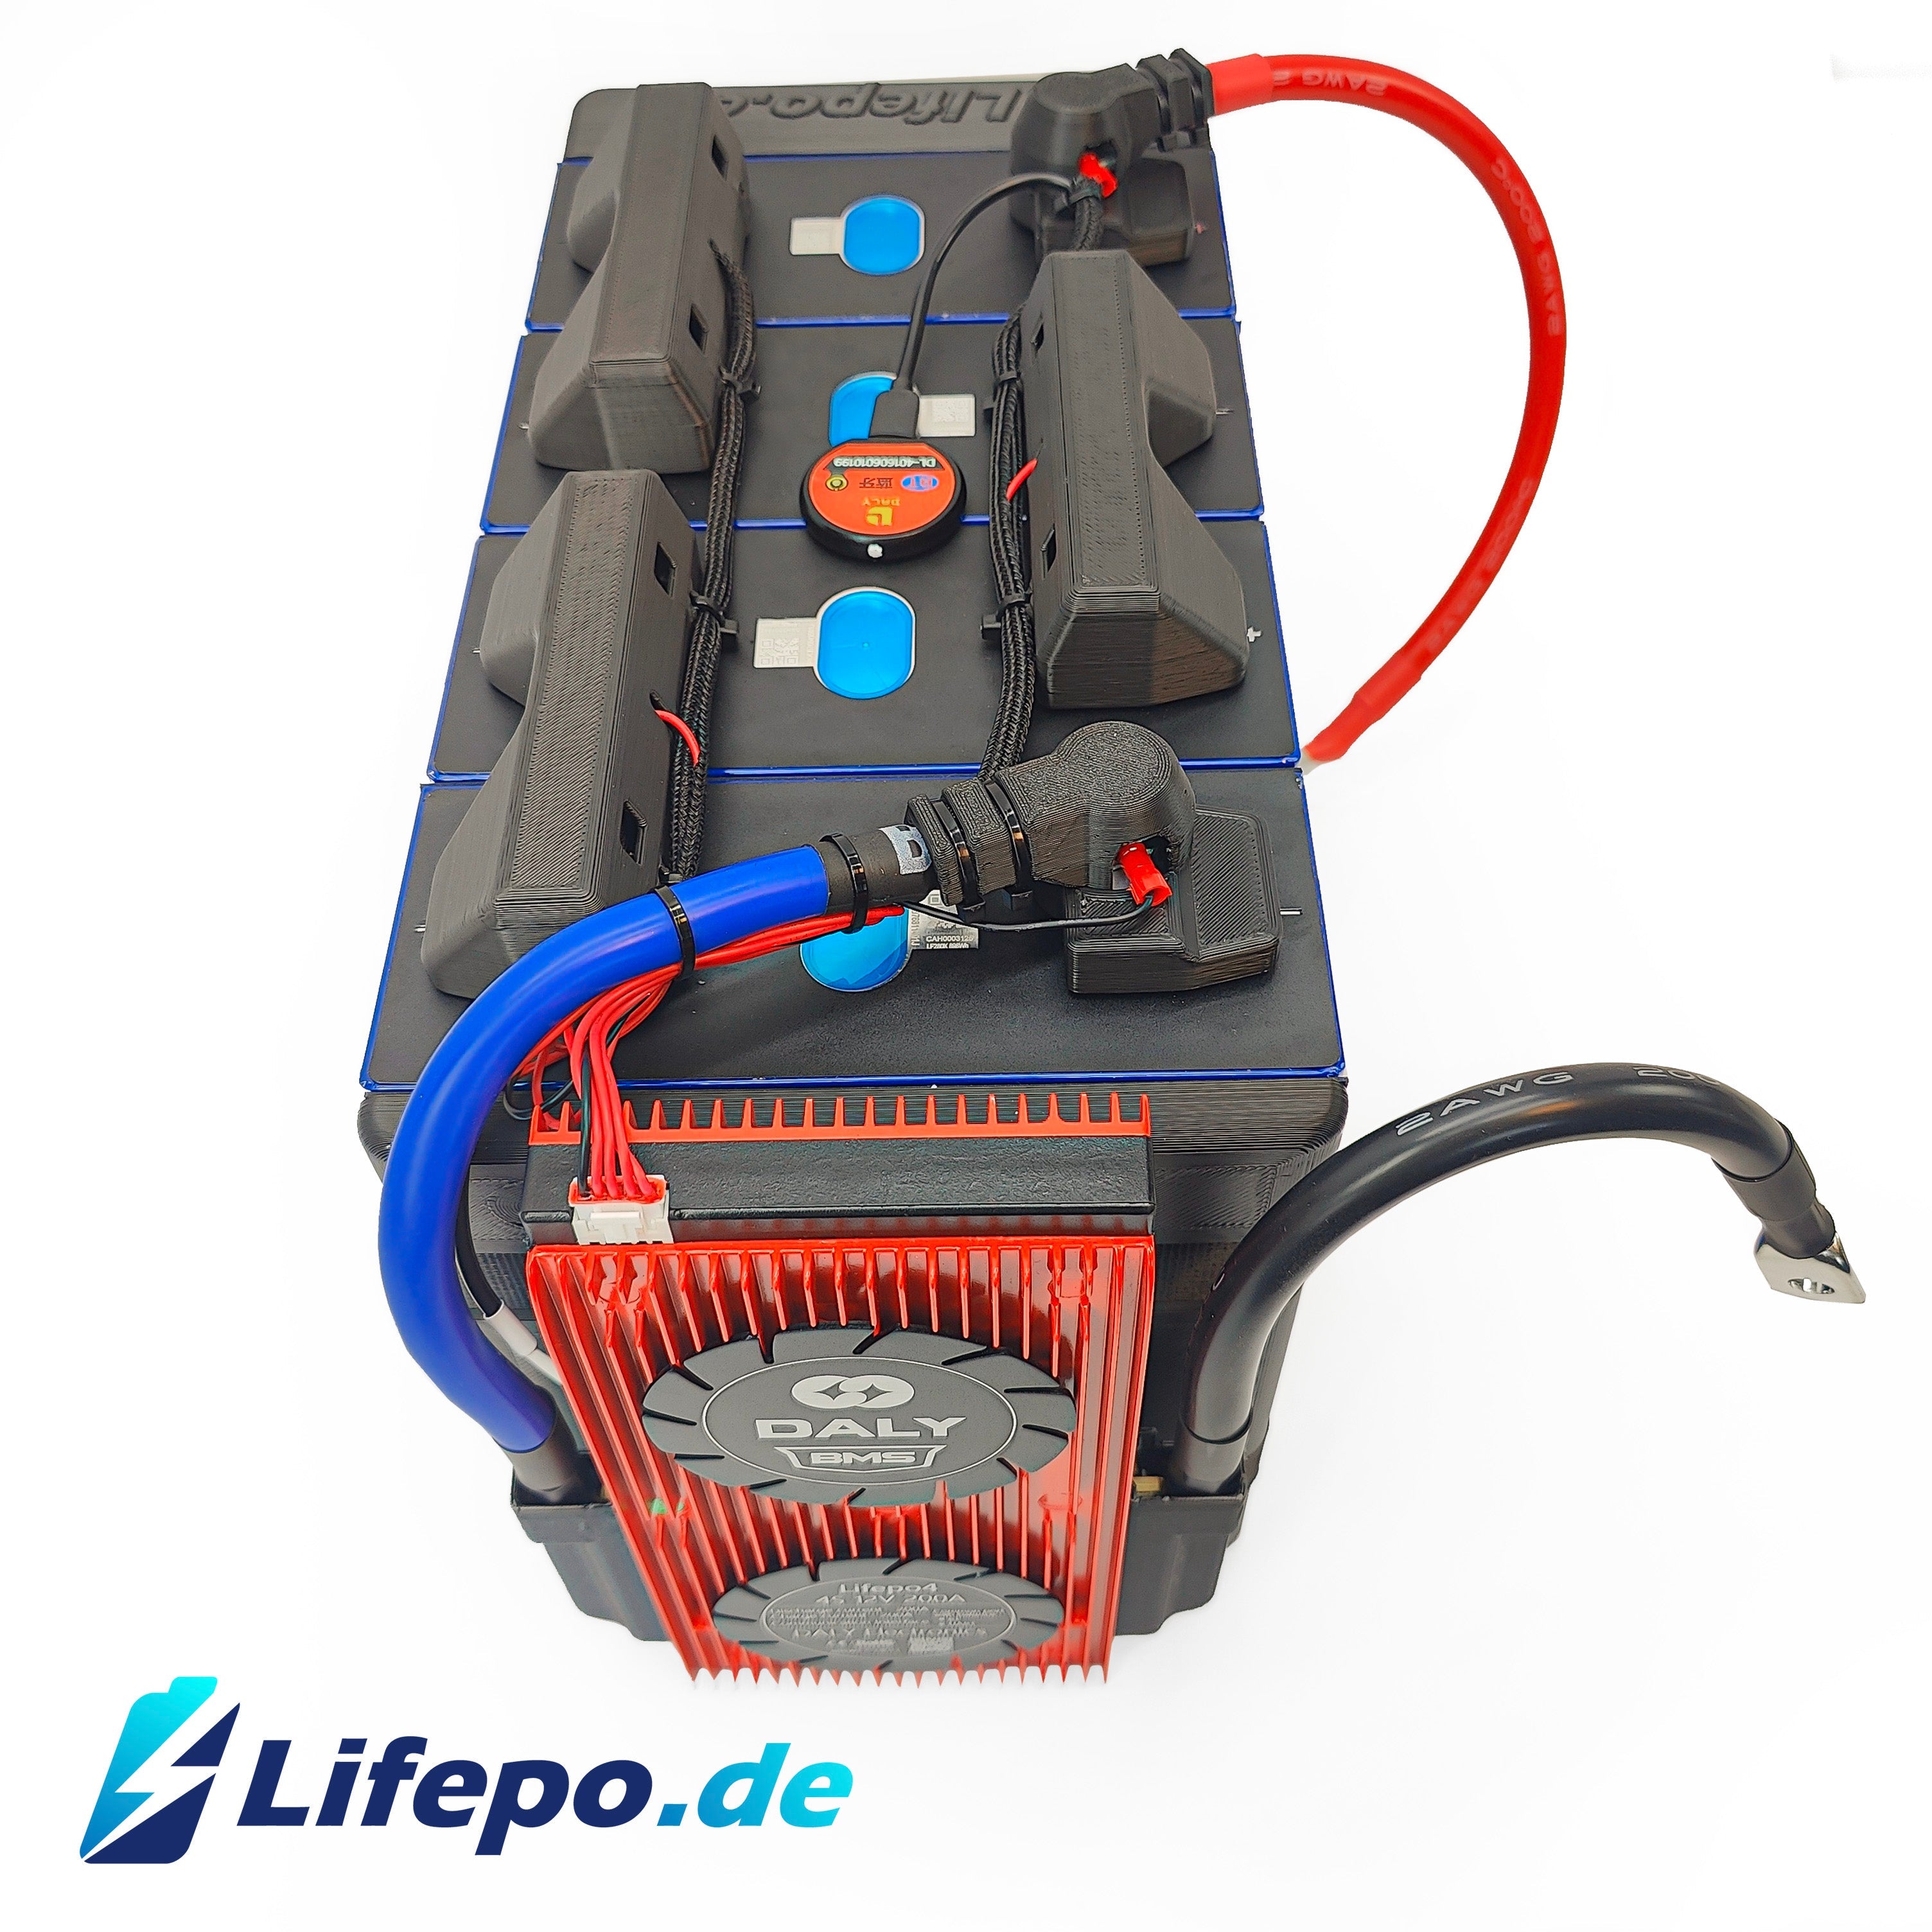 0% MwSt 12v 280Ah Lifepo4 Batteriesystem mit EVE Grade A+ 4kWh